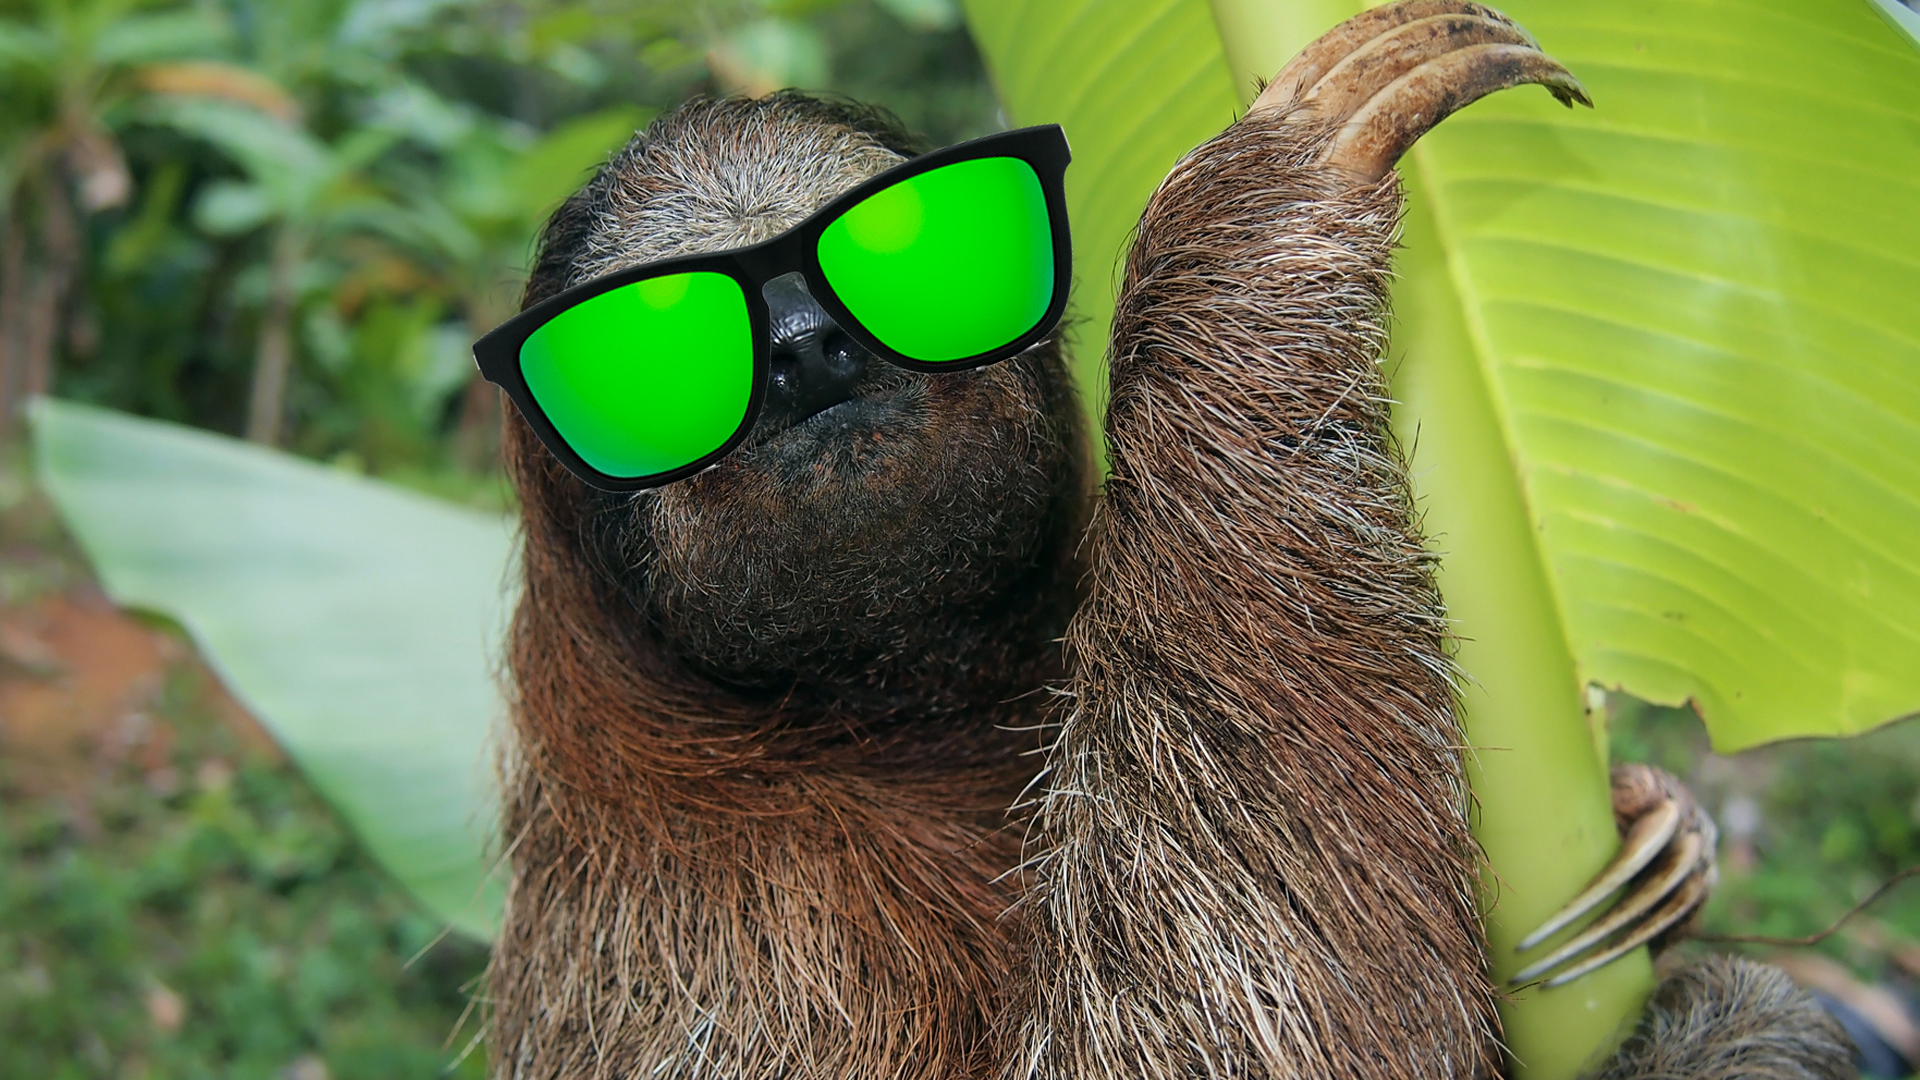 A sloth wearing sunglasses